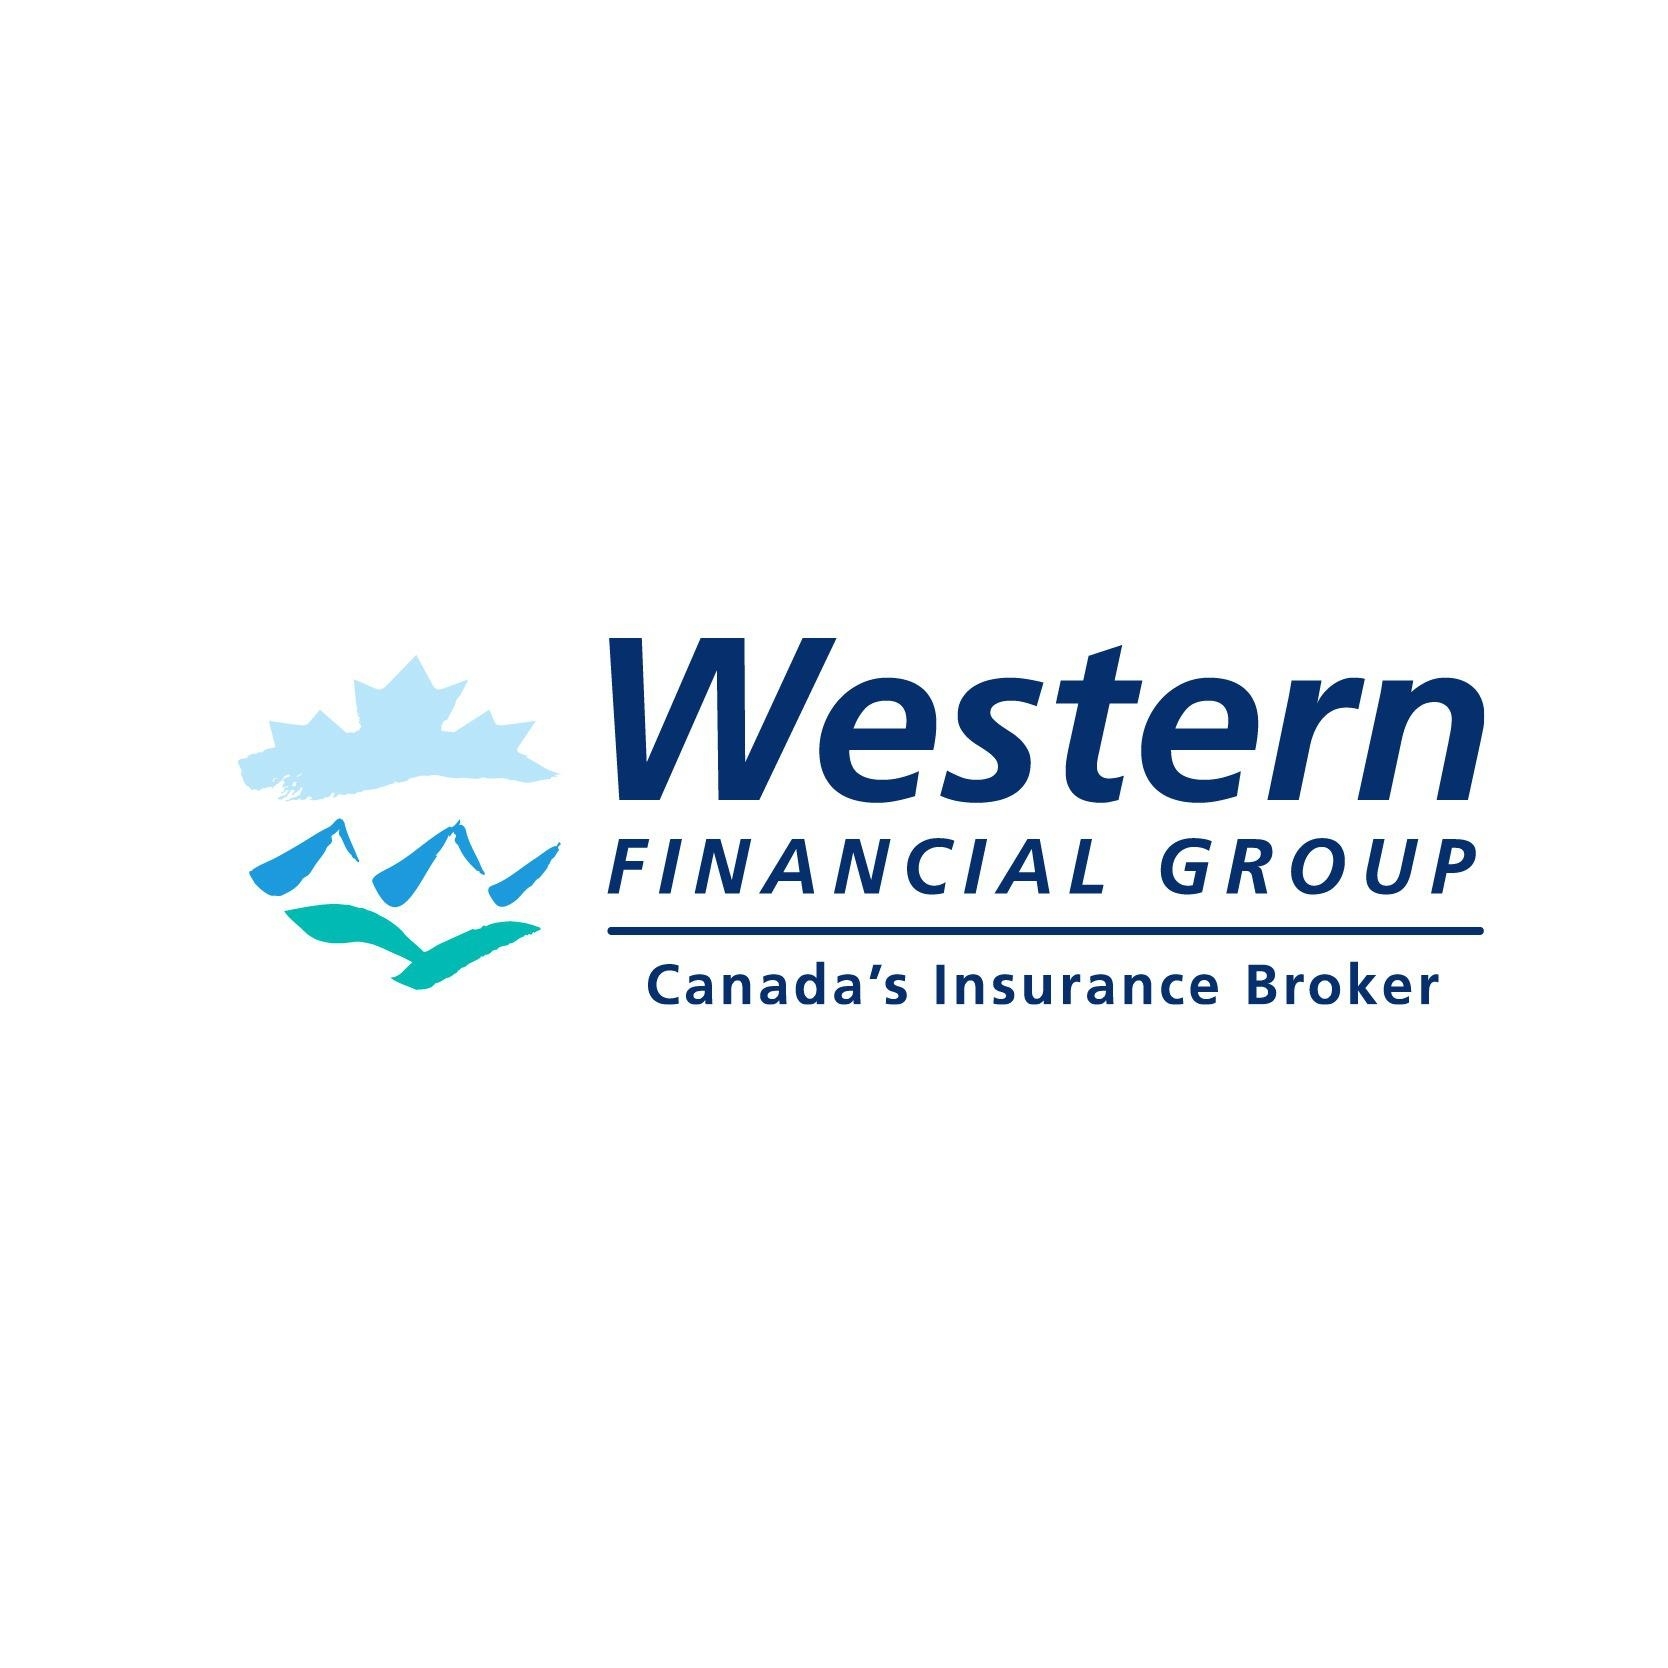 Western Financial Group Inc. - Canada's Insurance Broker - Insurance Agents